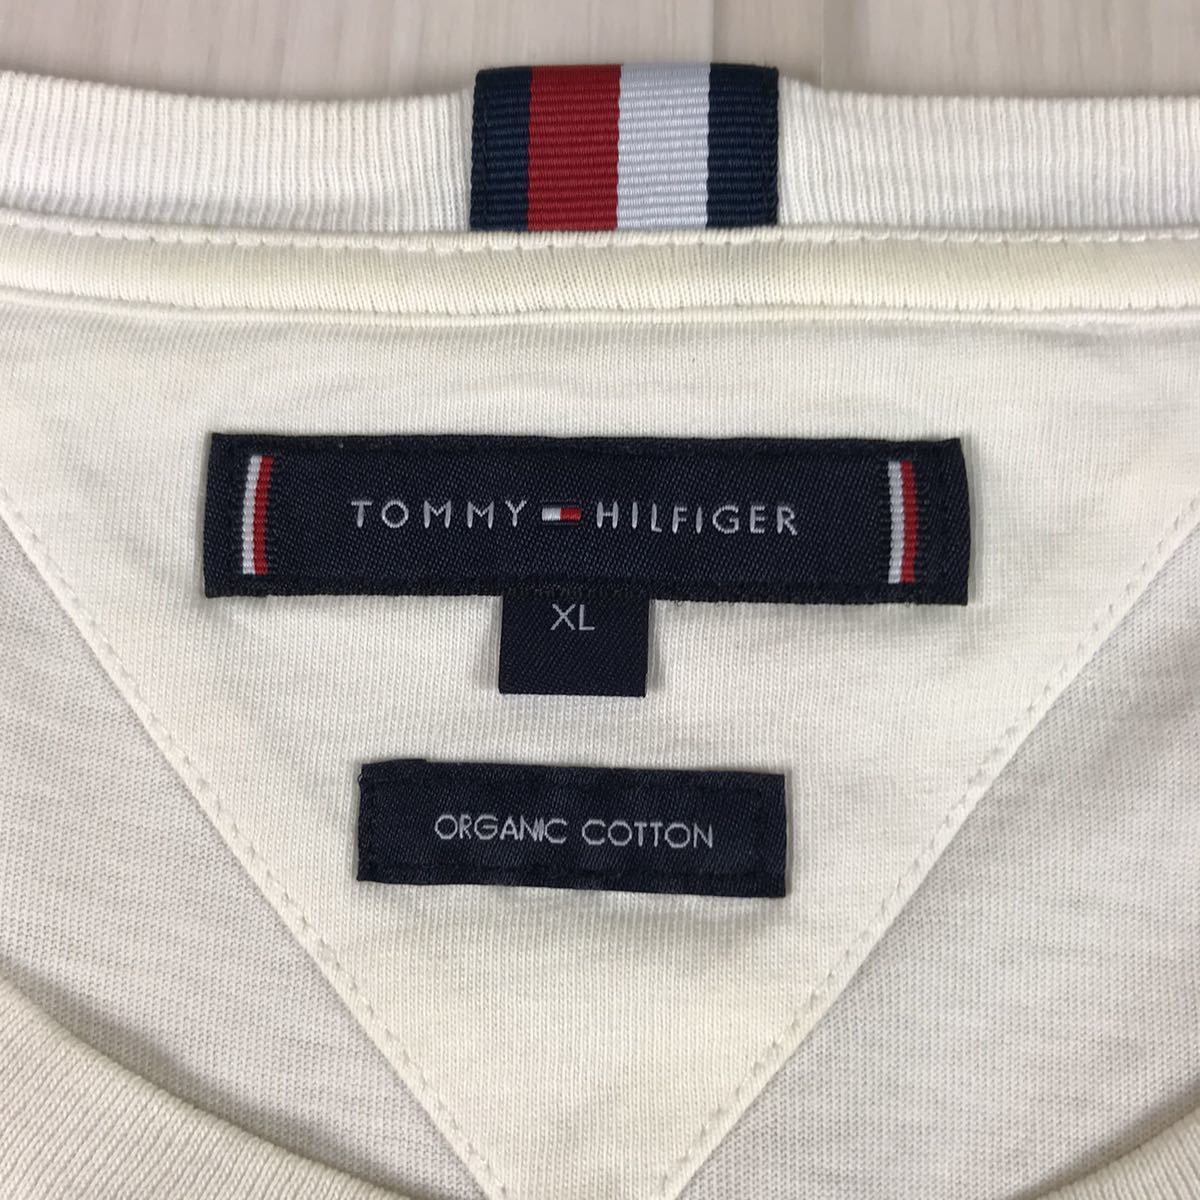 TOMMY HILFIGER トミー ヒルフィガー 半袖Tシャツ XL ホワイト プリント ビッグサイズの画像7